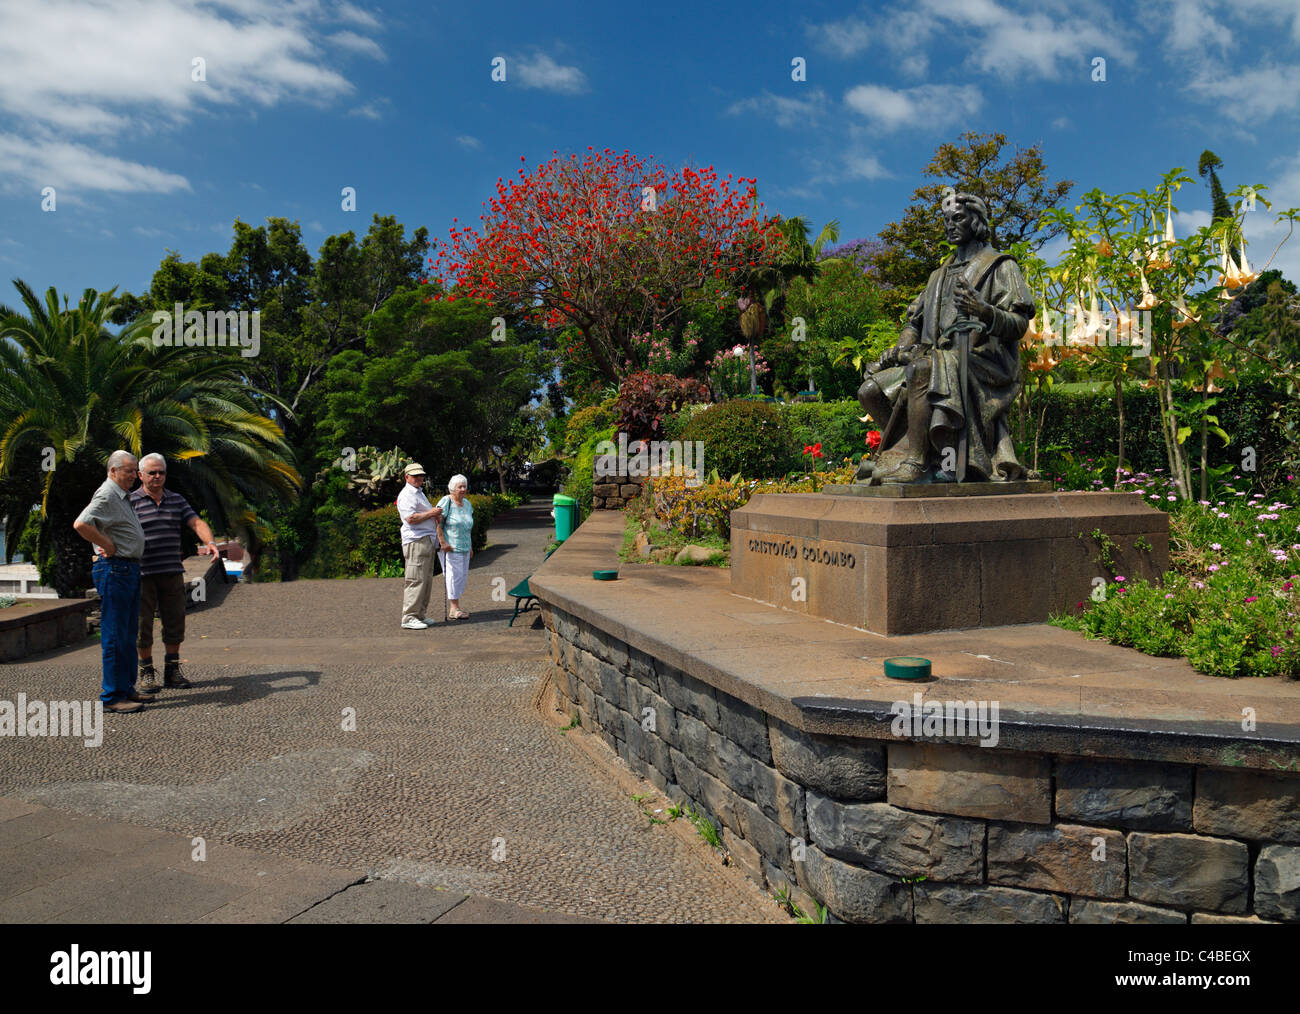 La estatua de Cristóbal Colón en el Parque de Santa Caterina, Funchal, Madeira, Portugal. Foto de stock